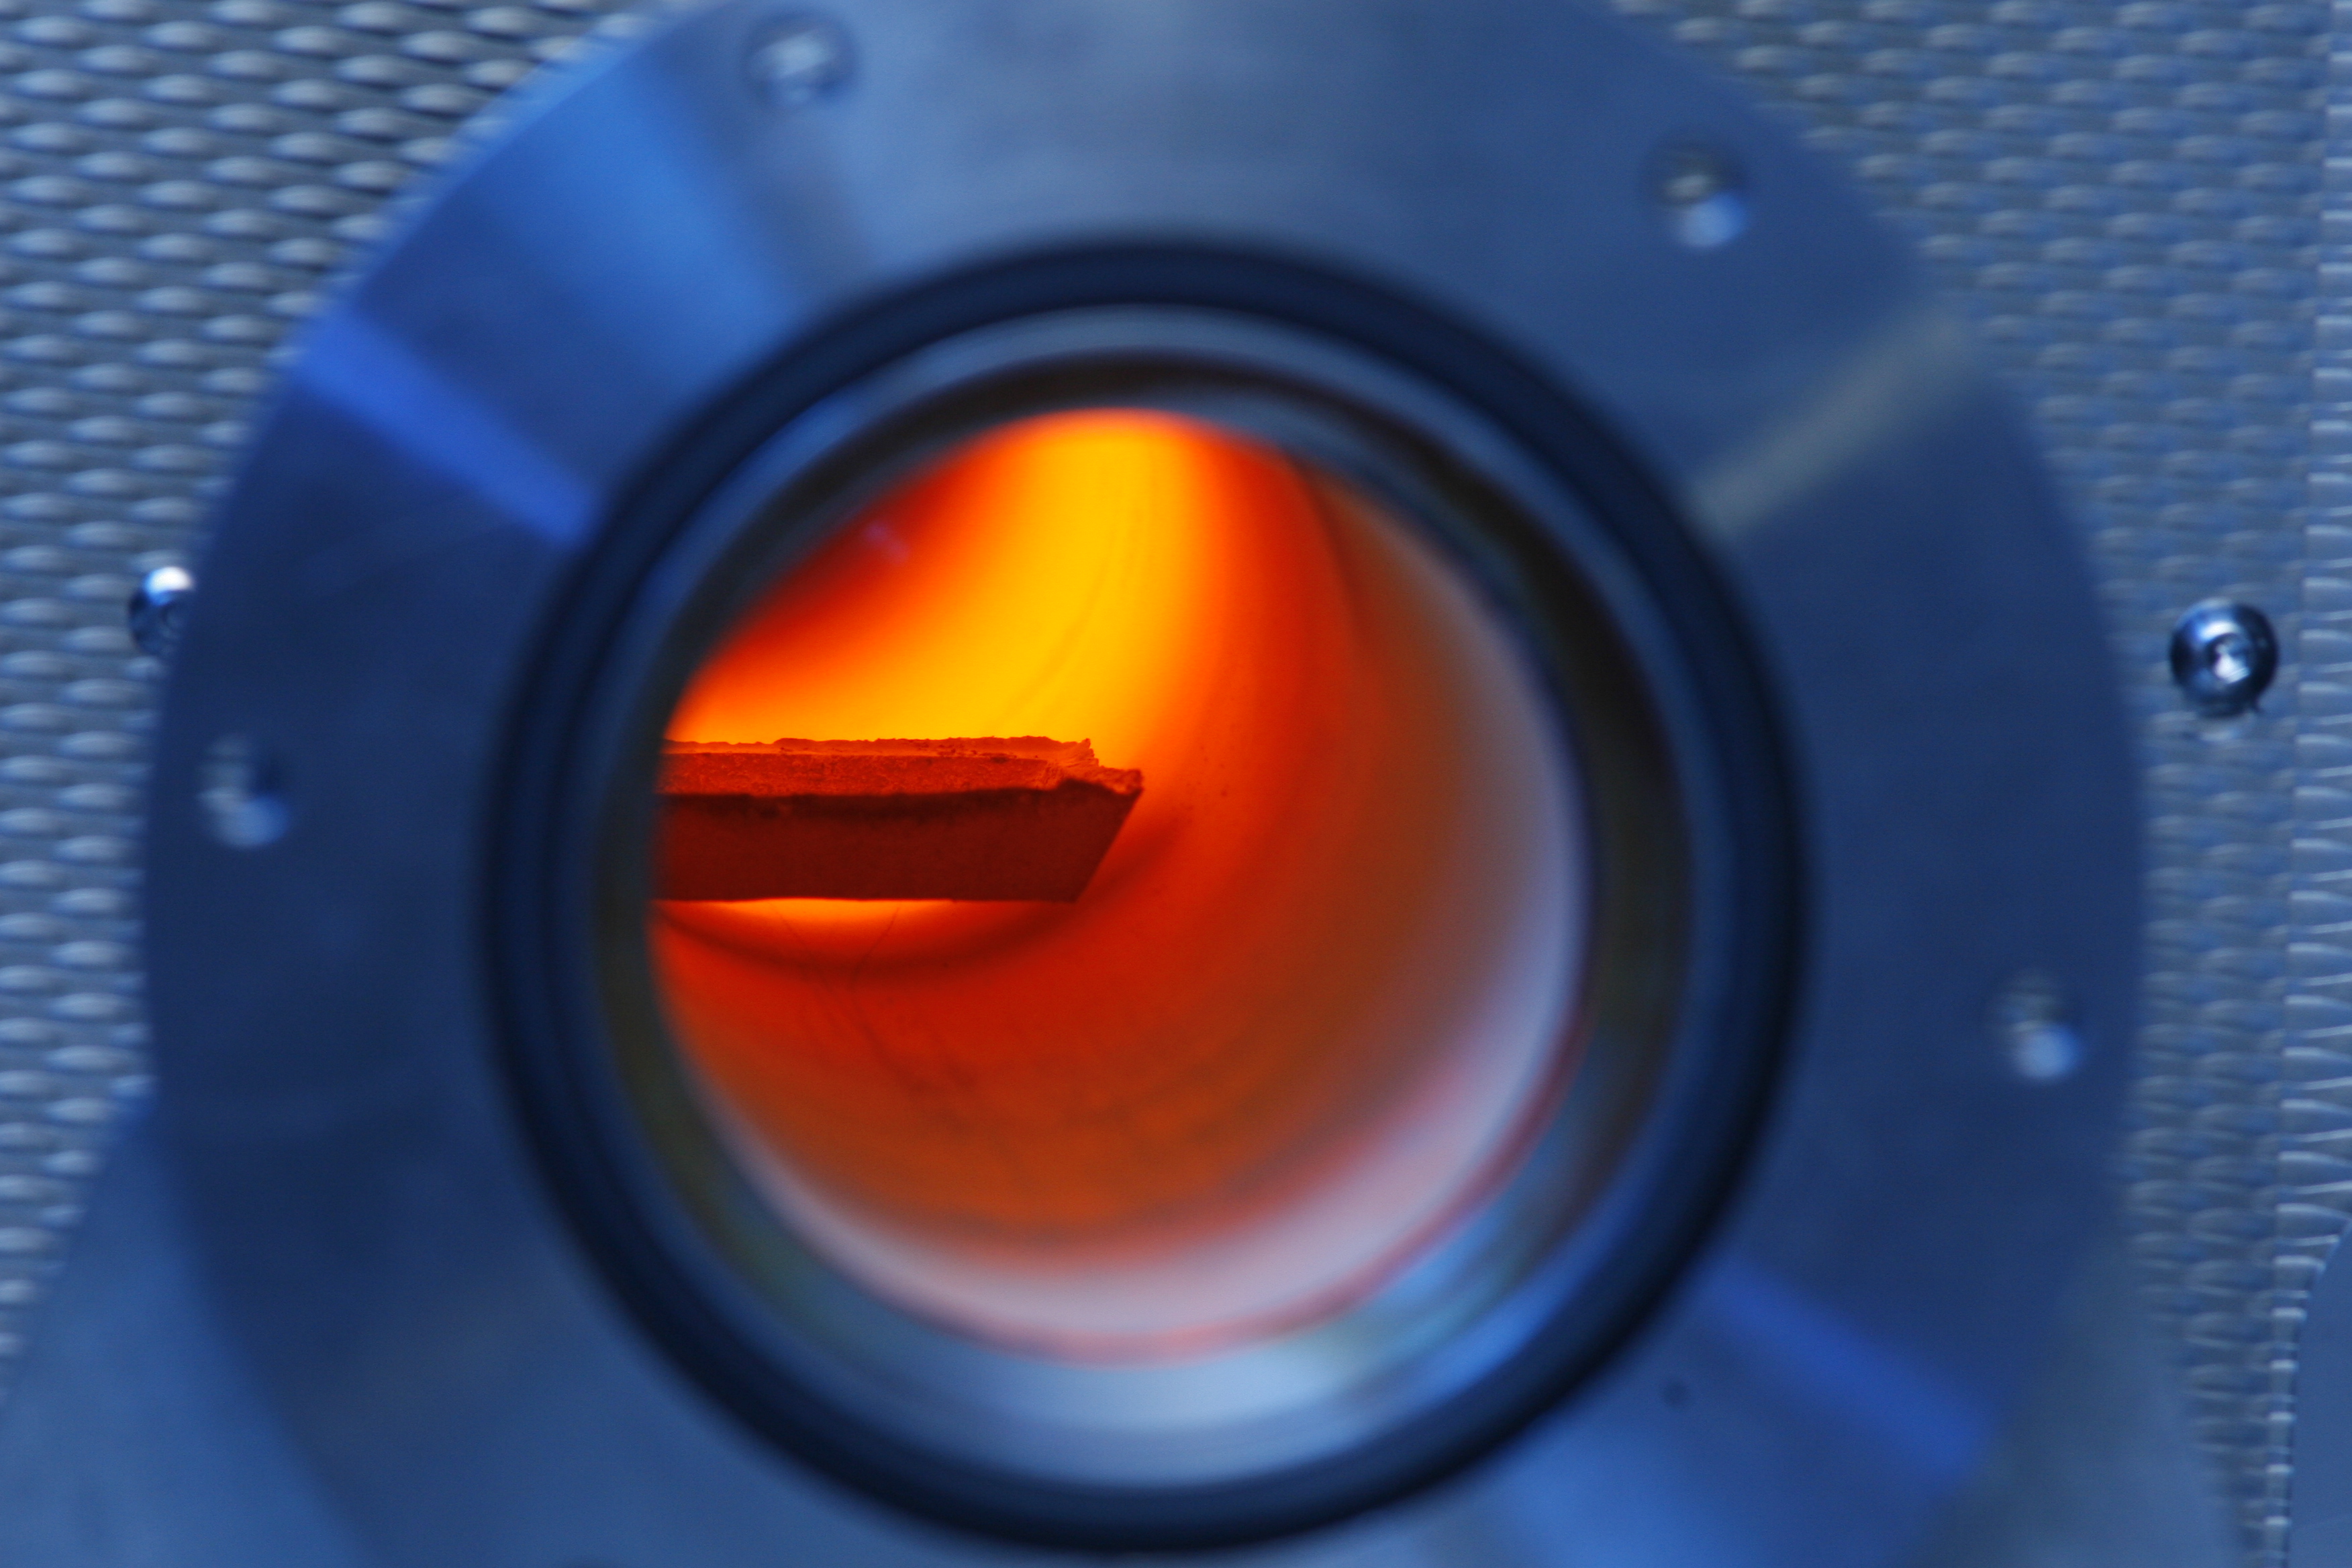 View inside a tube furnace